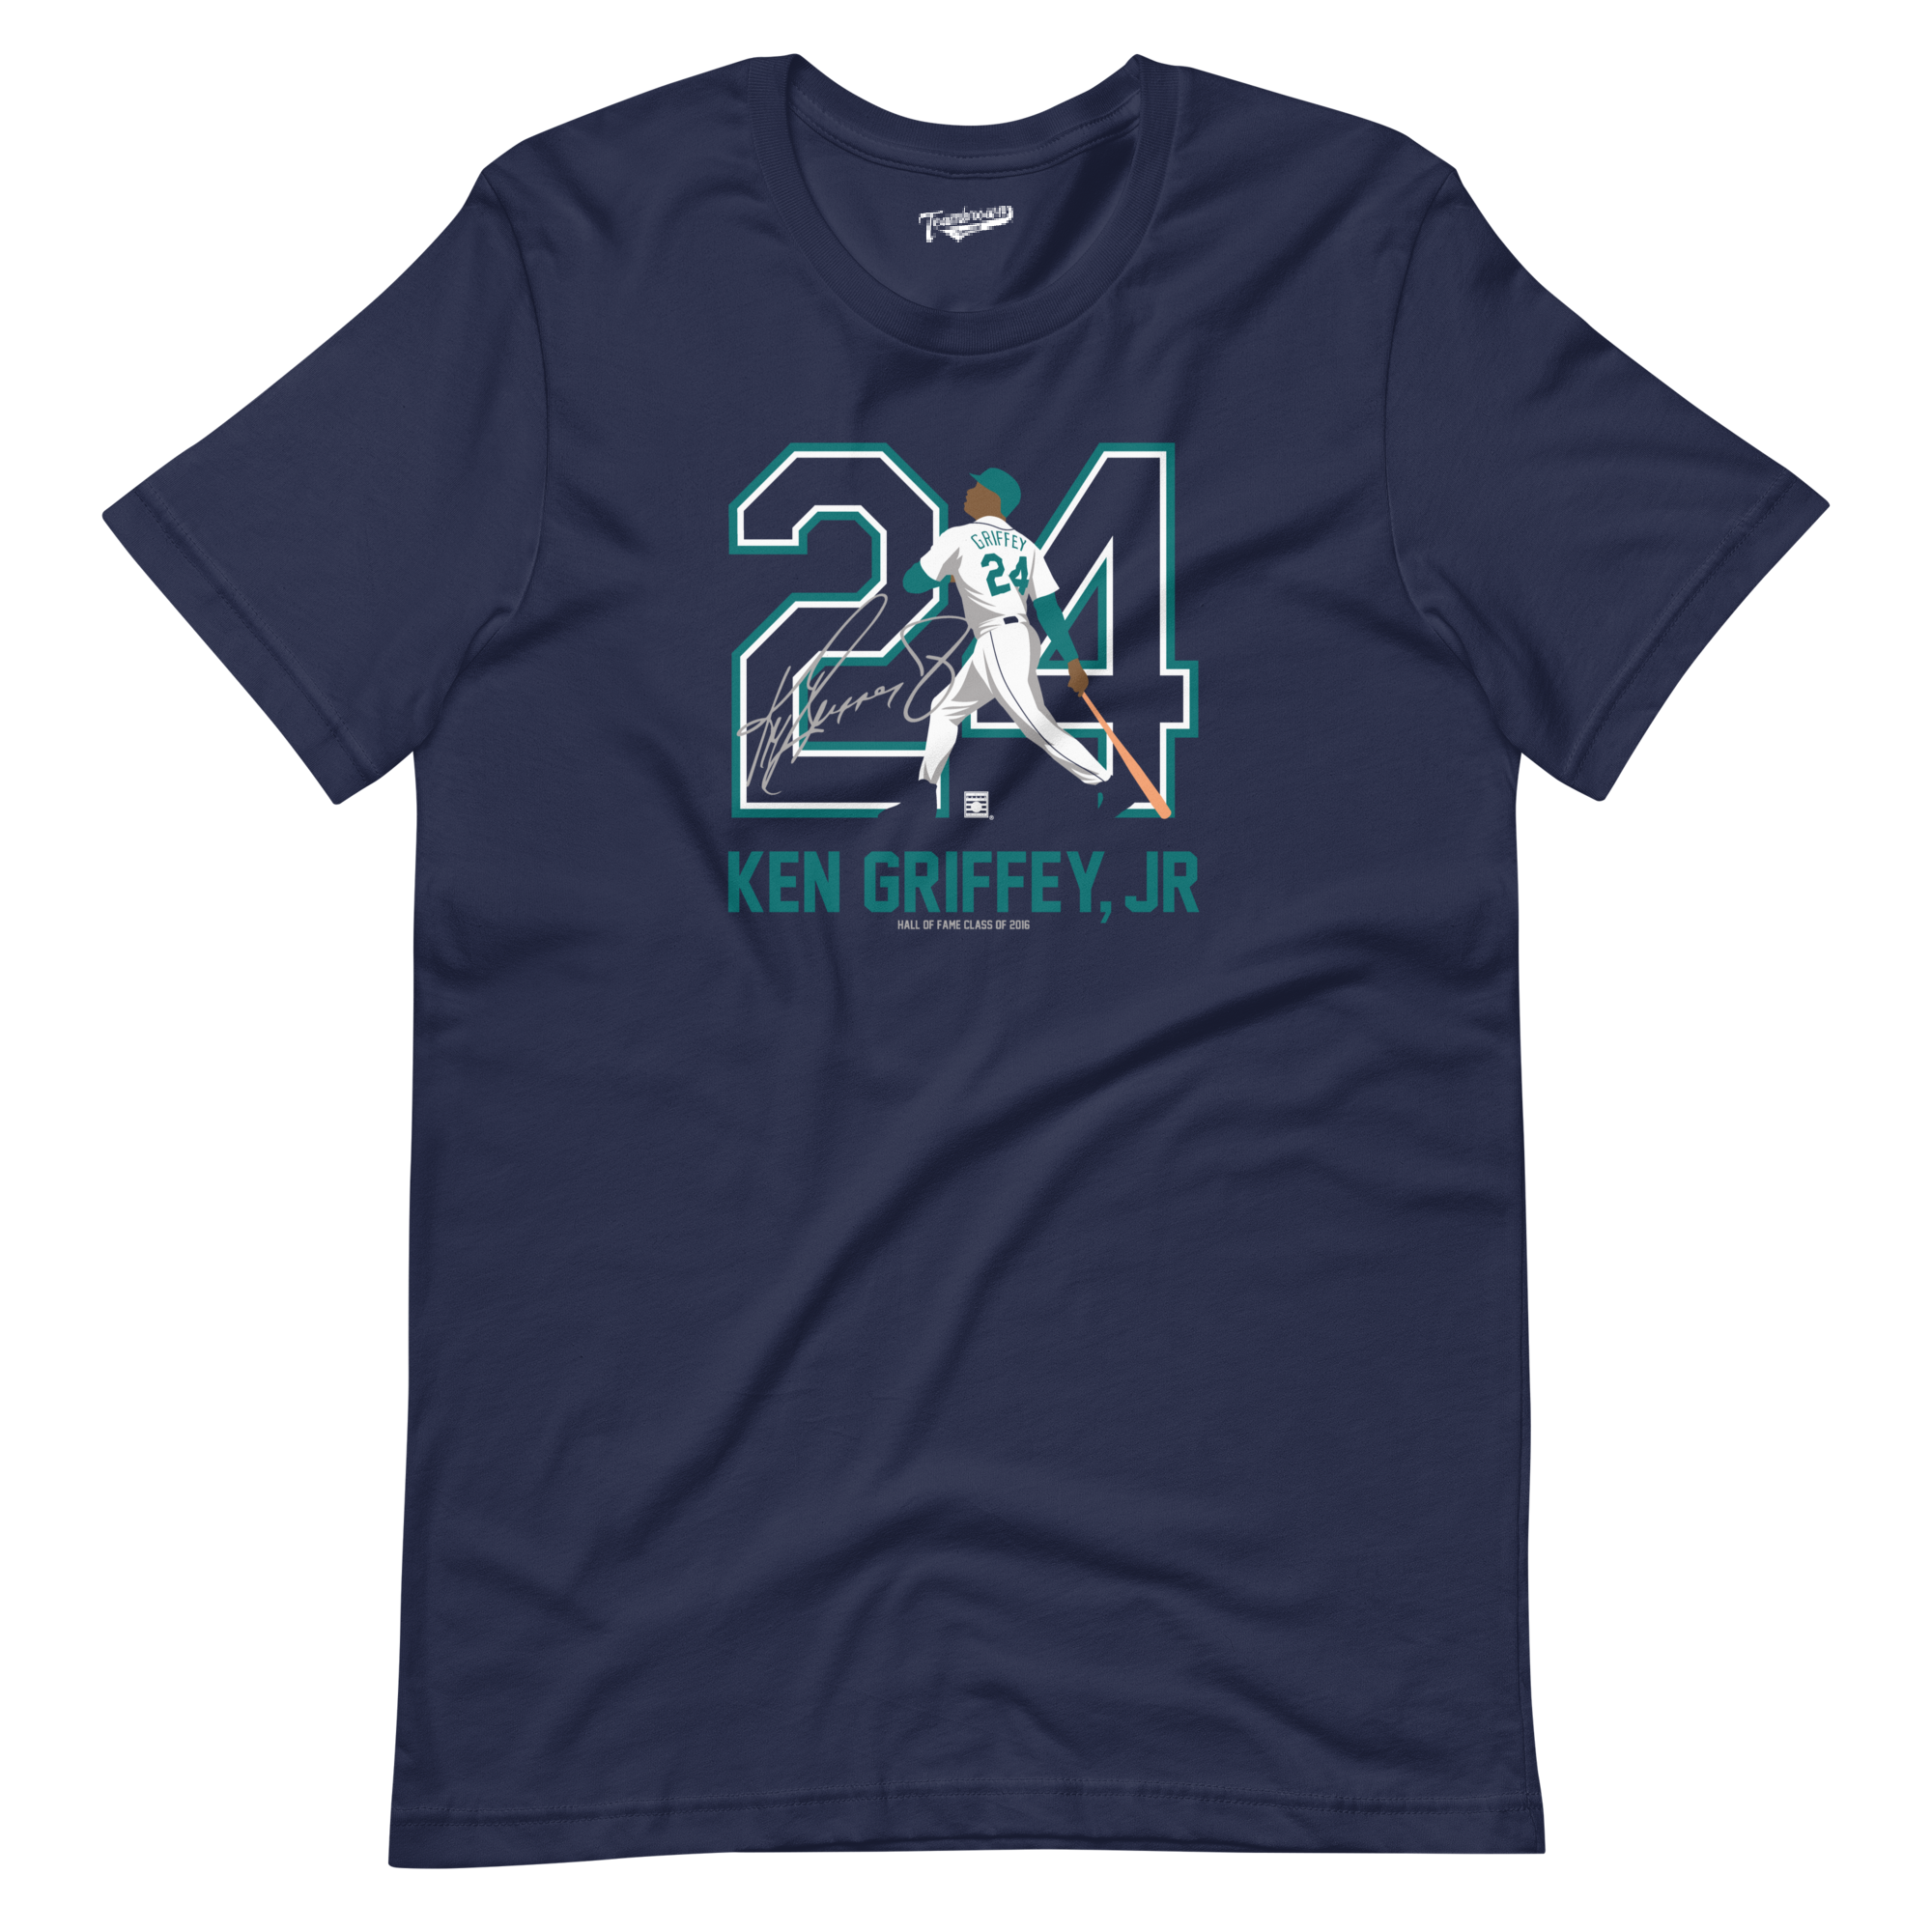 Seattle Mariners Hometown Men's Nike MLB T-Shirt